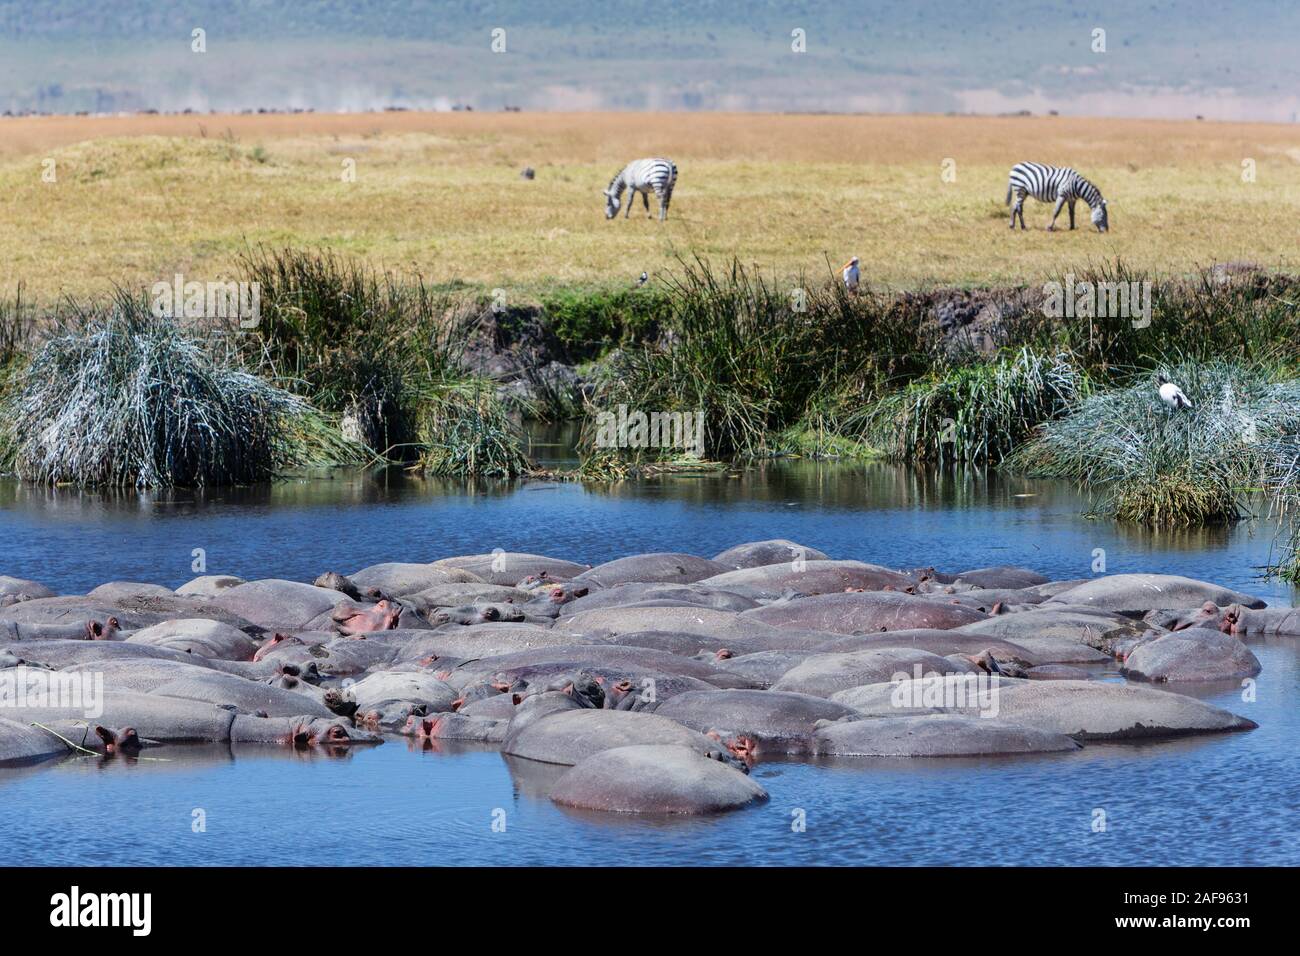 Tanzania. Ngorongoro Crater, Hippos in the Hippopotamus Pool, Zebra in the Distance. Stock Photo